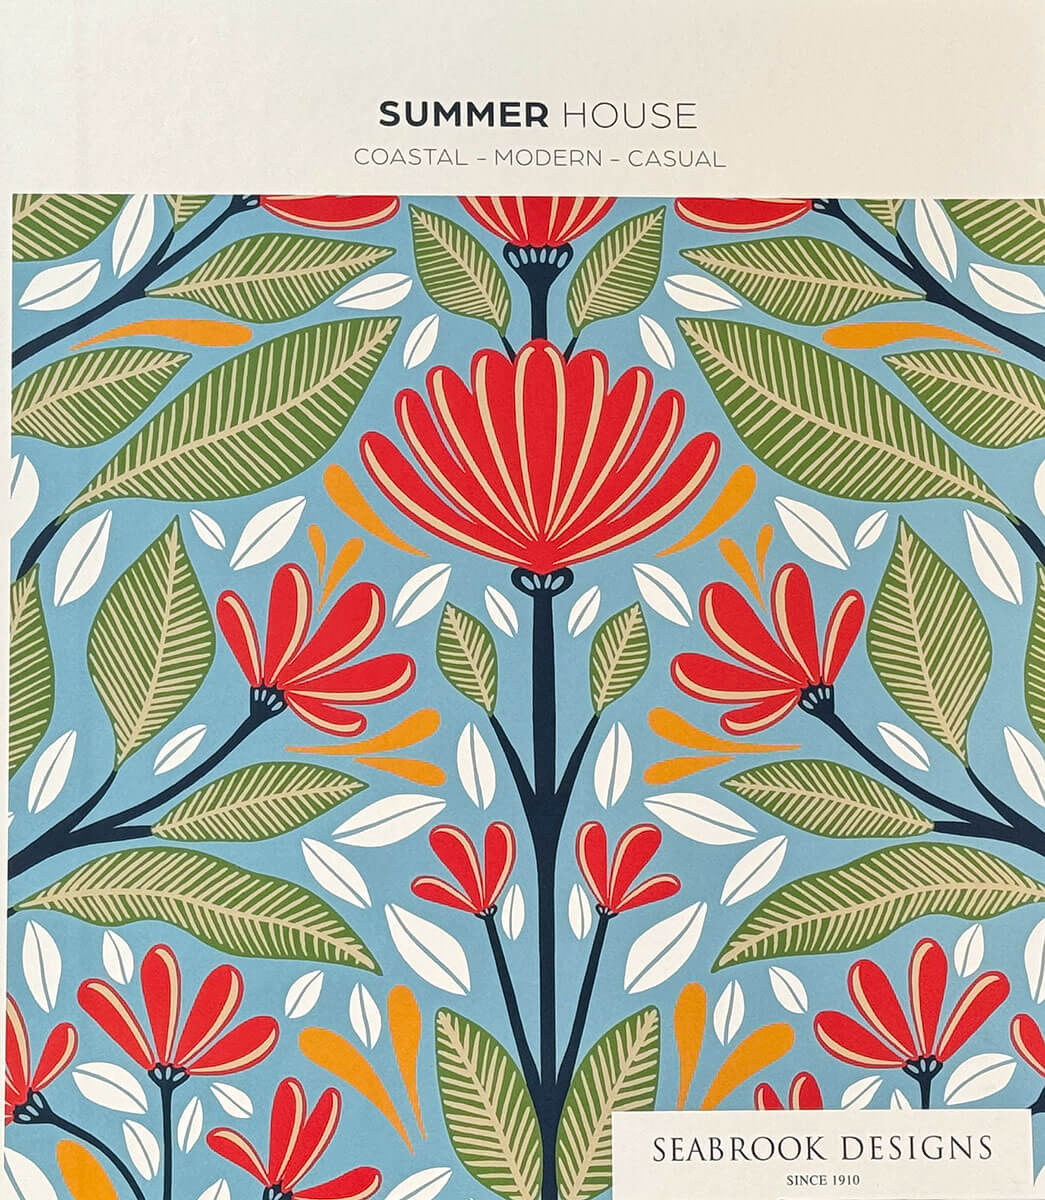 Seabrook Summer House Skye Wave Stringcloth Wallpaper - Barley White